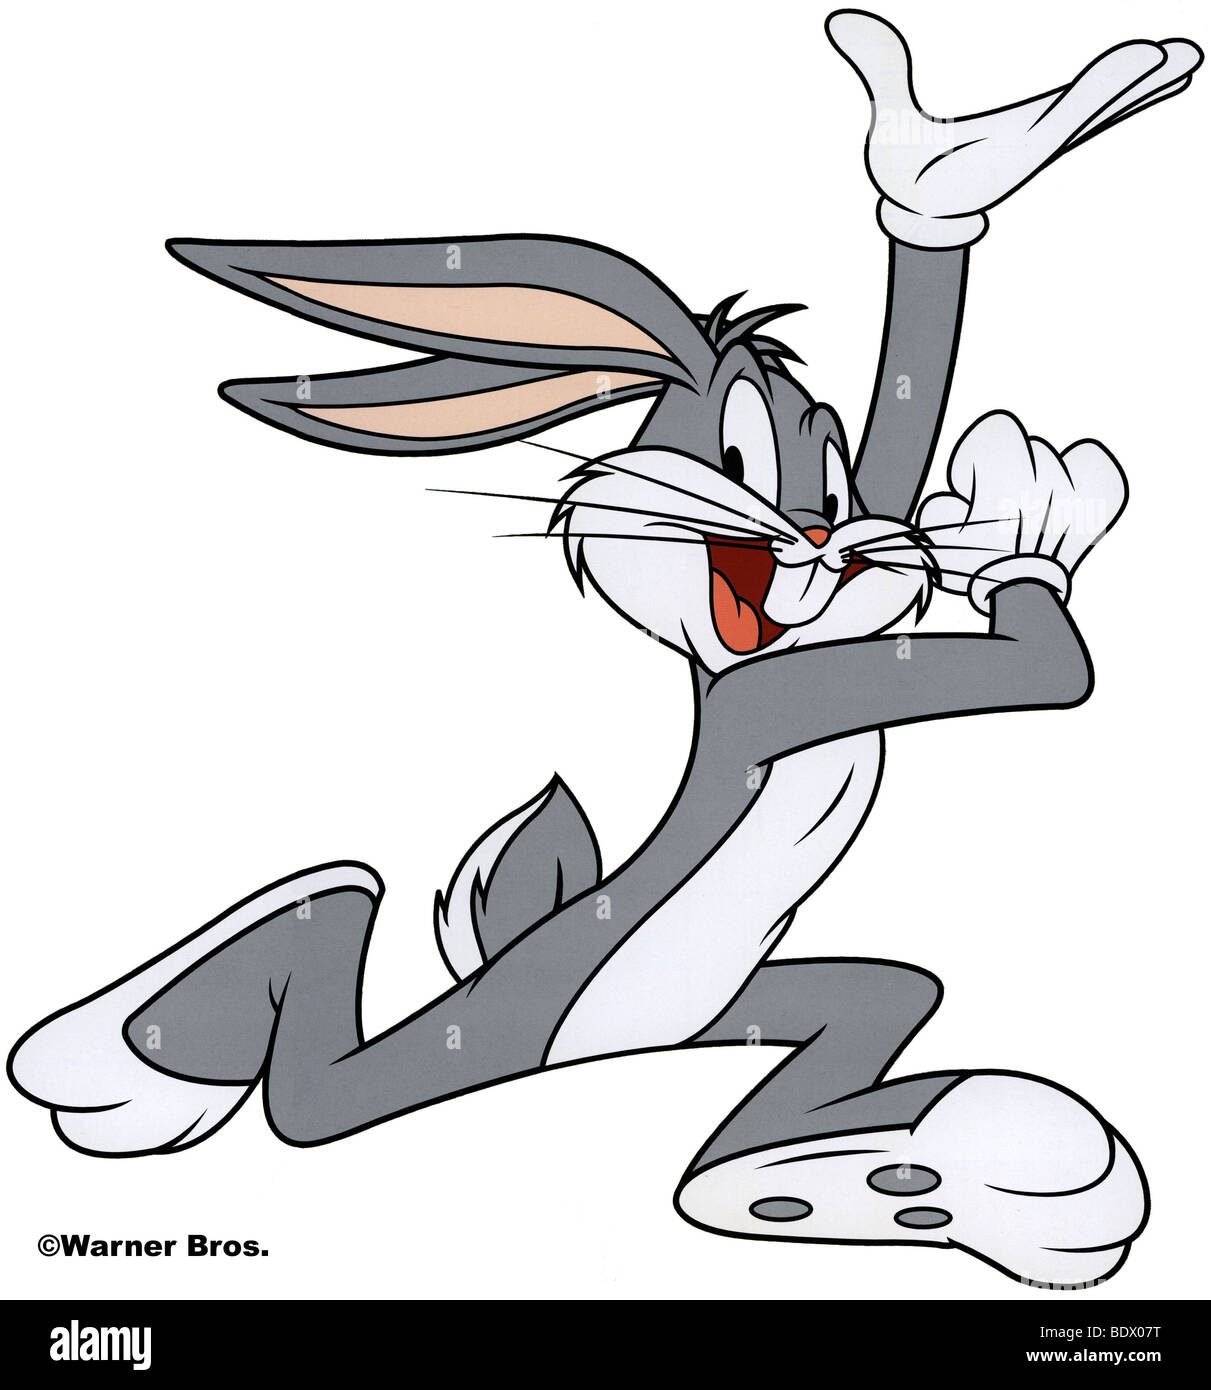 BUGS BUNNY - Warner Bros cartoon character in the Looney Tunes series Stock Photo